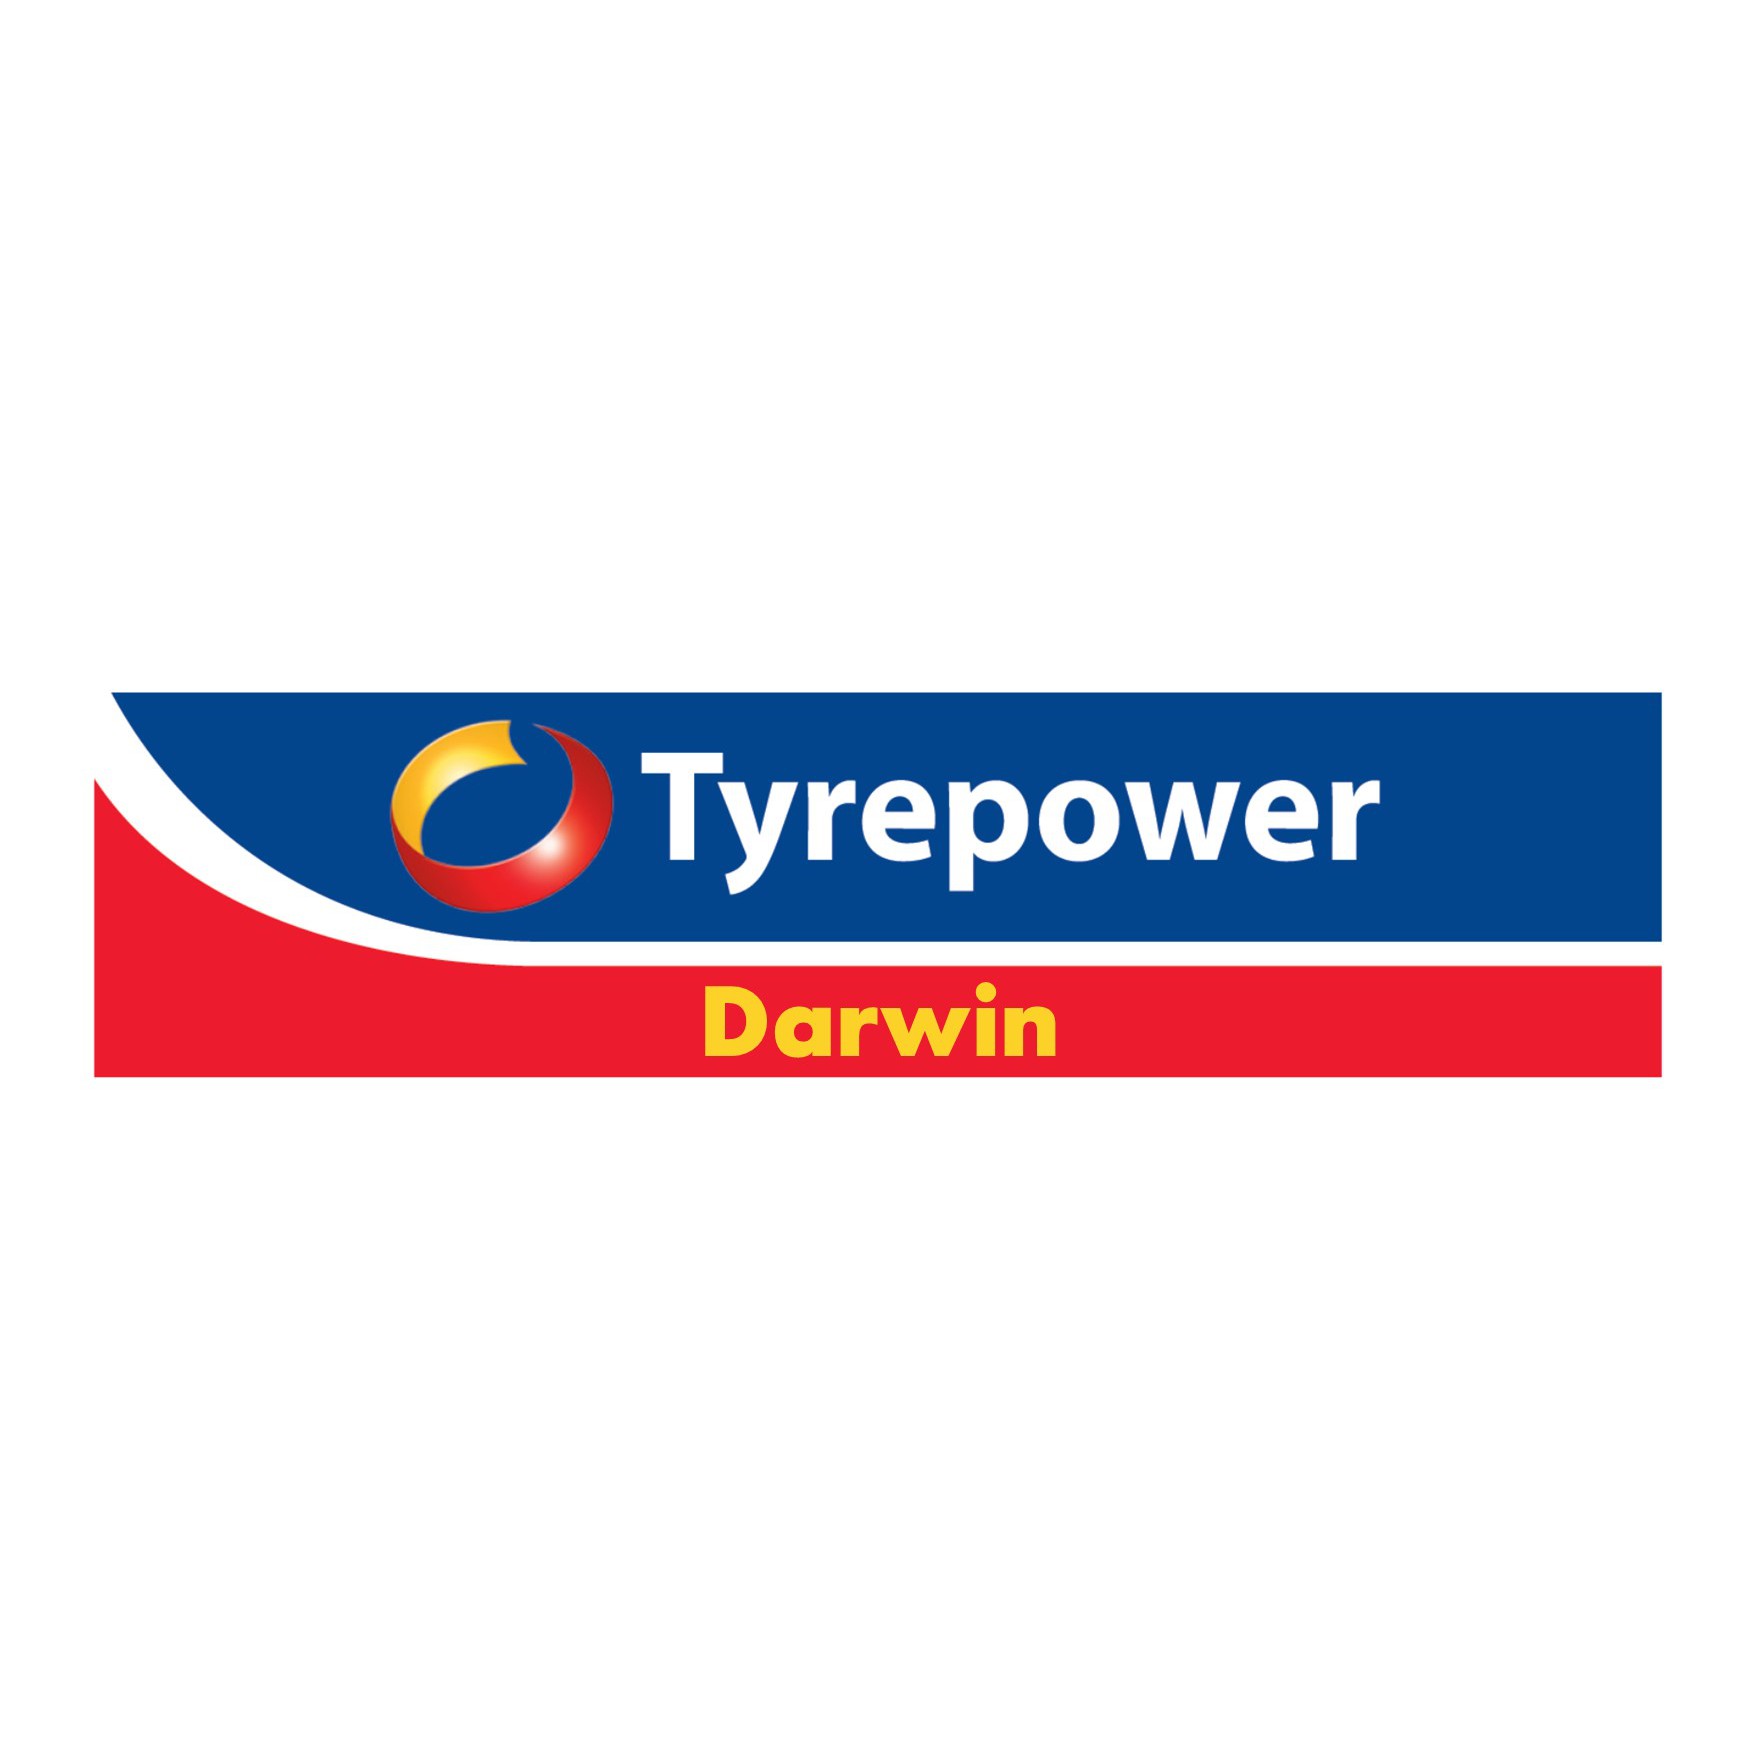 Tyrepower Darwin - Parap, NT 0820 - (08) 8981 6911 | ShowMeLocal.com